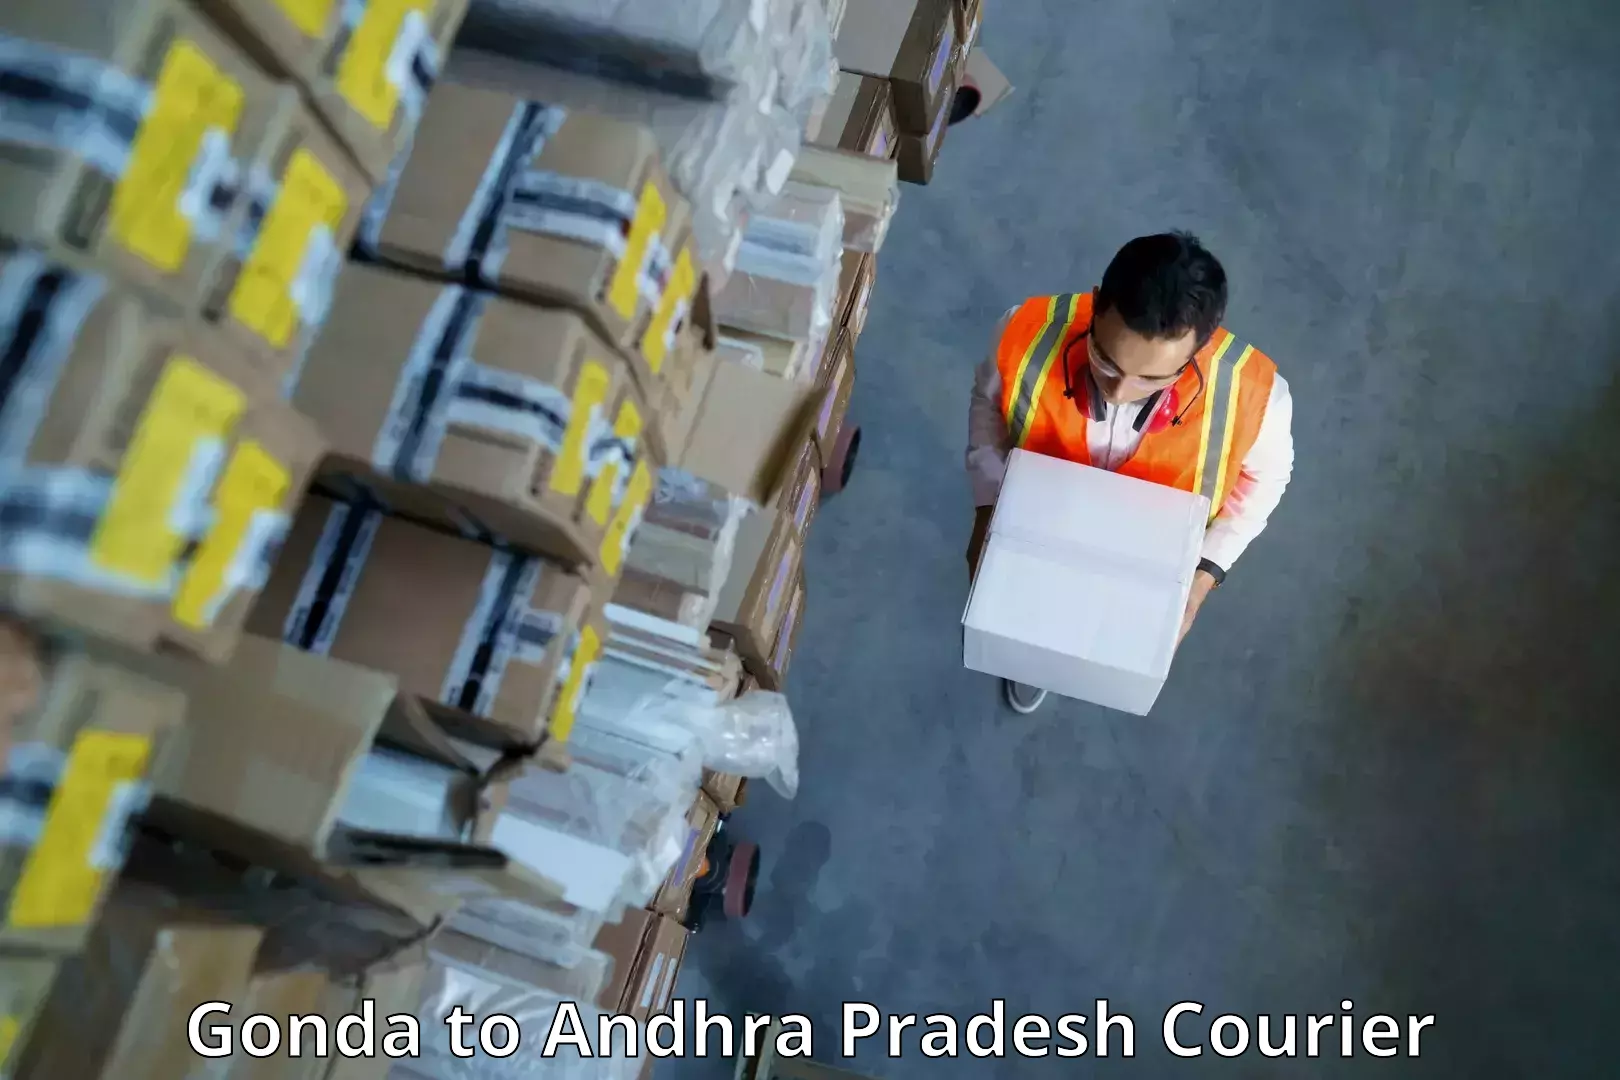 Reliable parcel services Gonda to Malikipuram